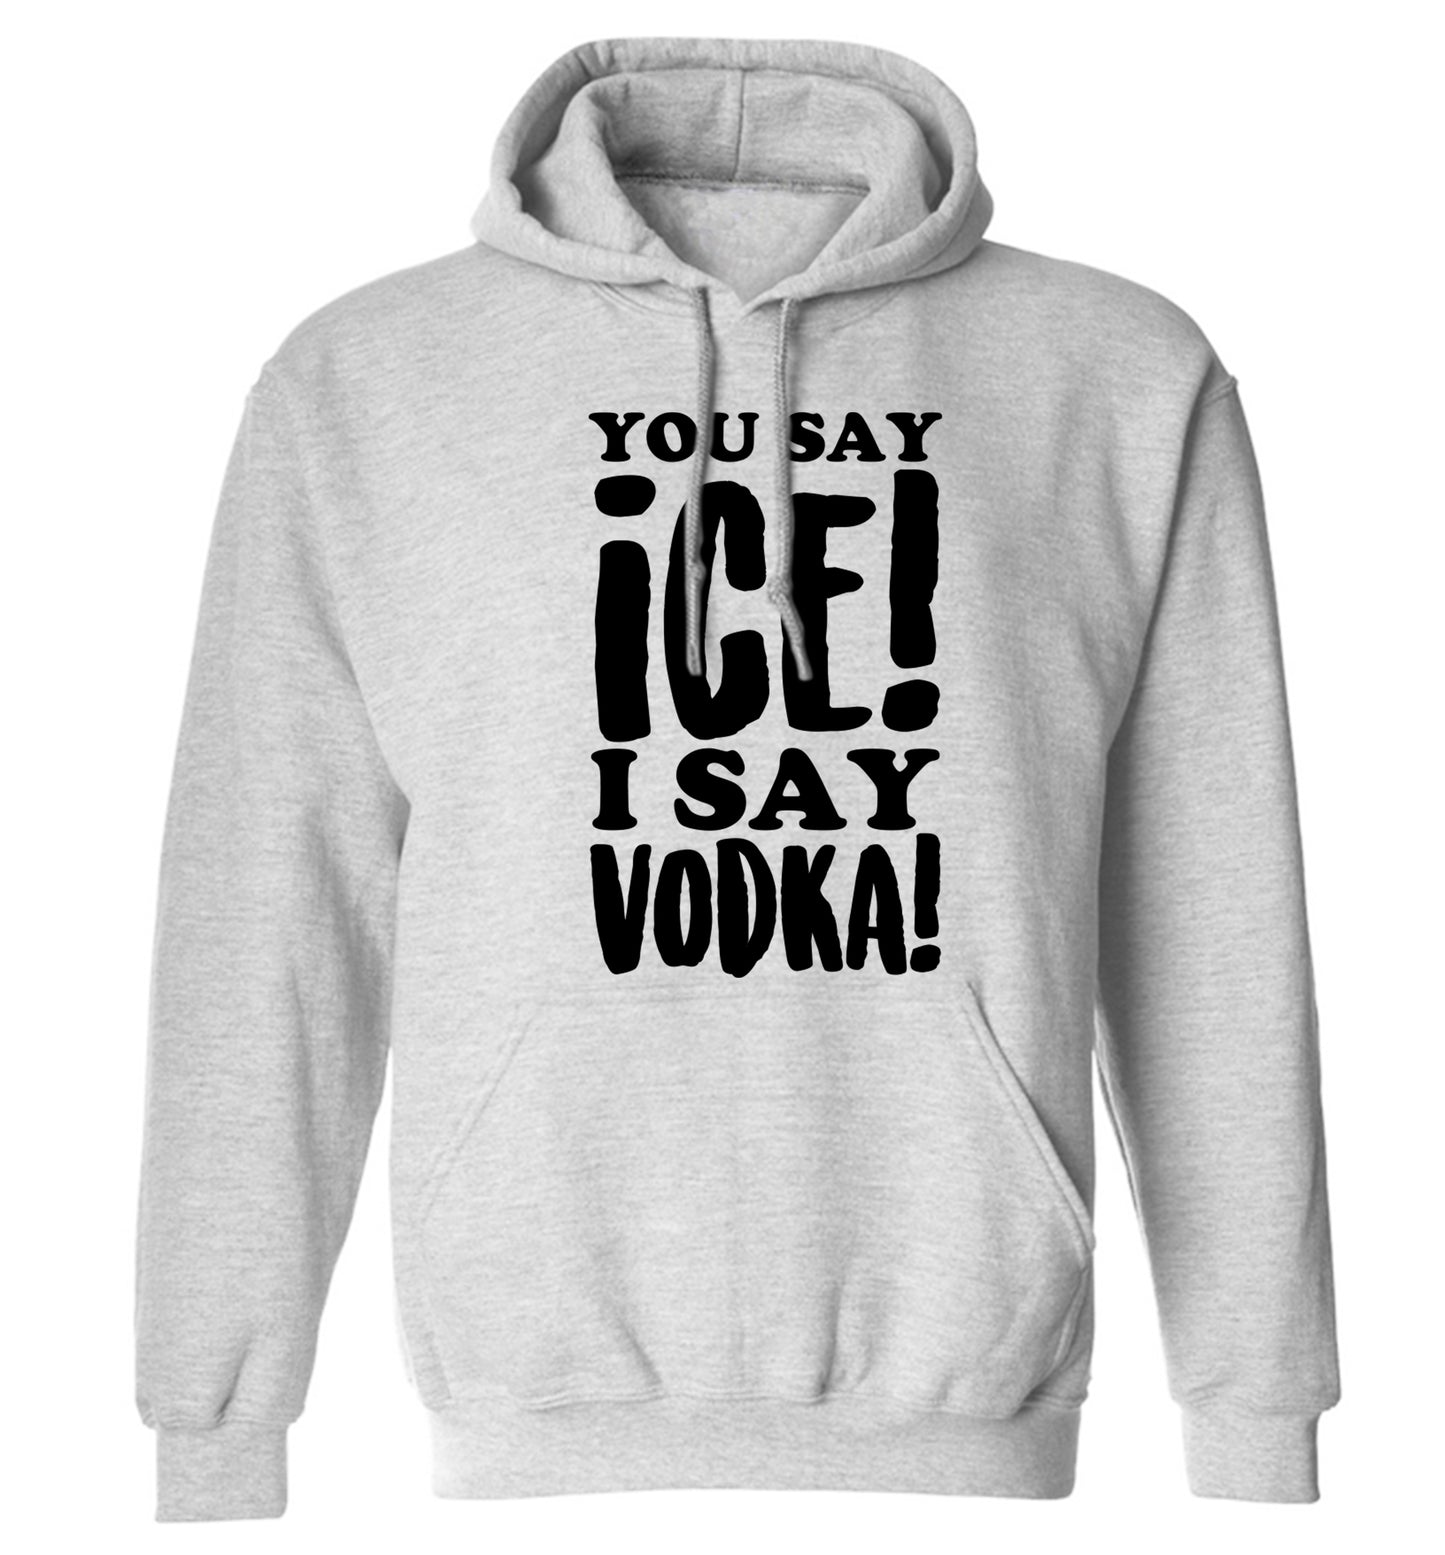 You say ice I say vodka! adults unisex grey hoodie 2XL